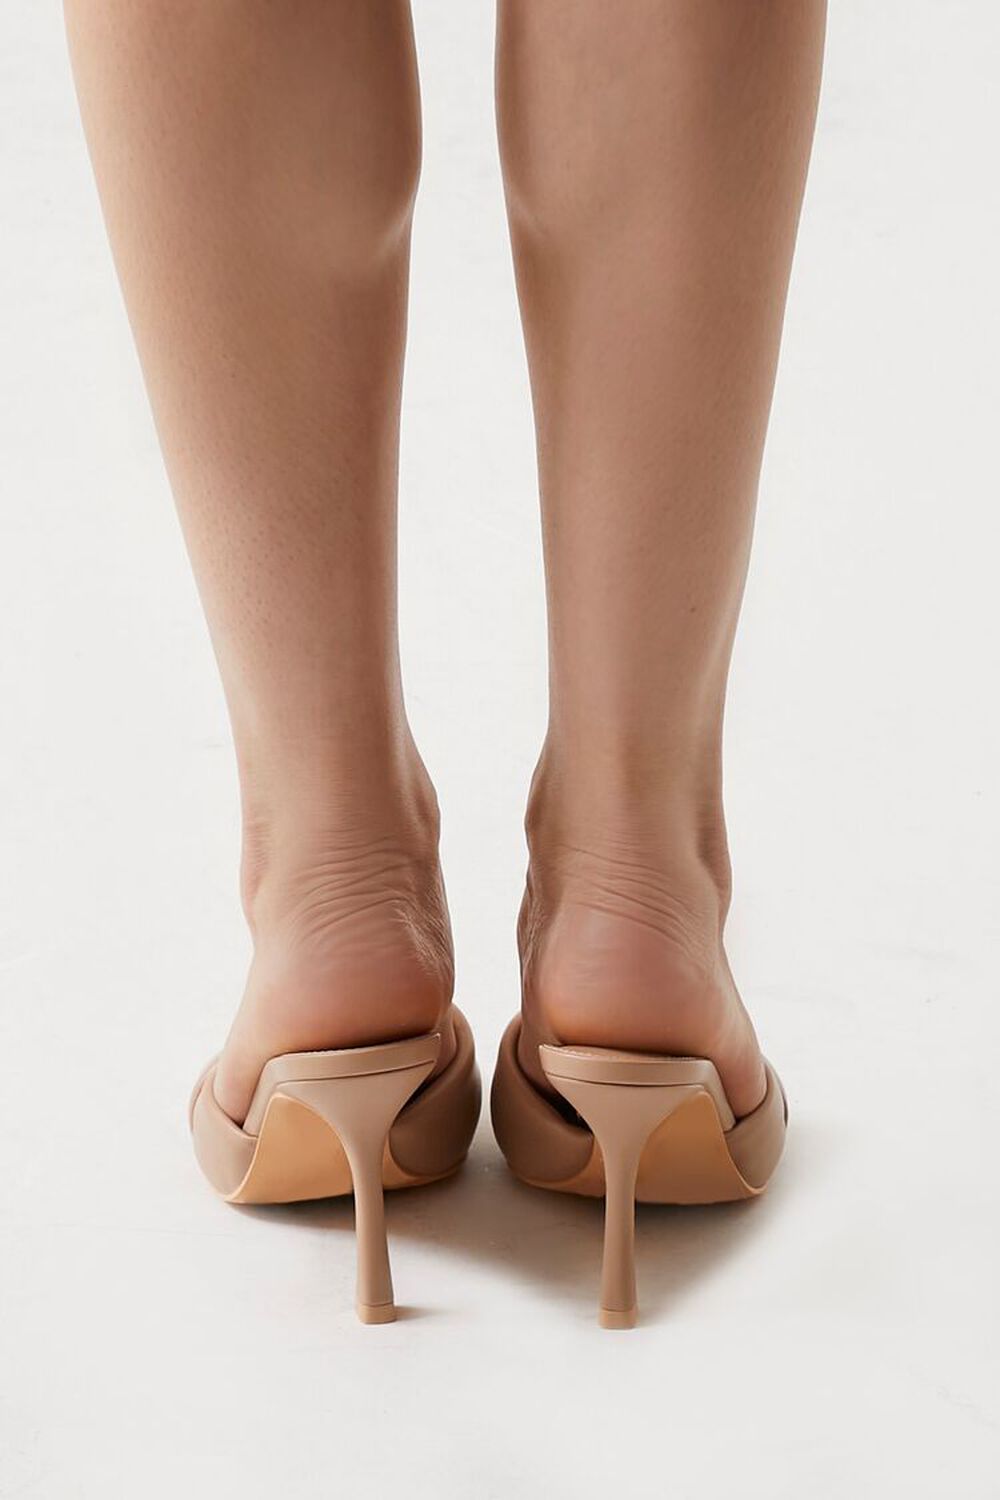 NUDE Faux Leather Crisscross Stiletto Heels, image 3